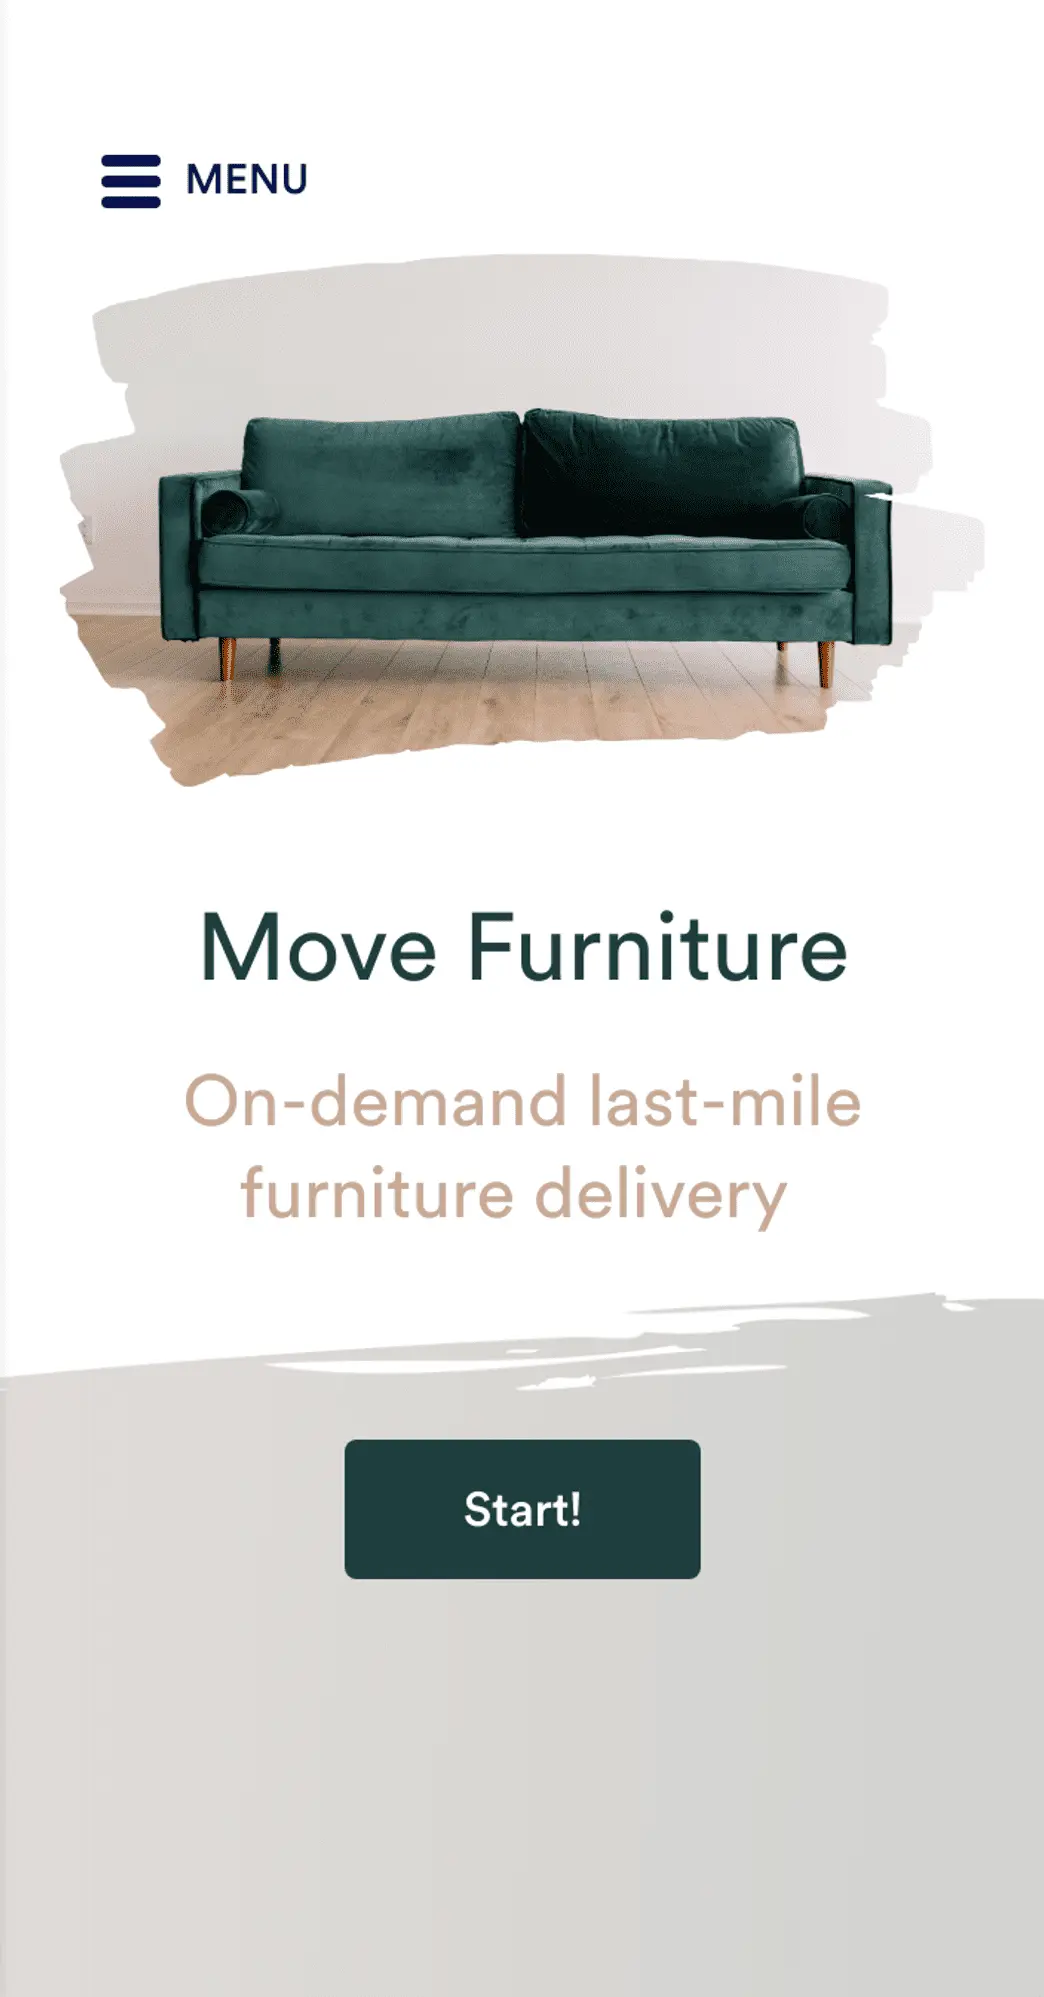 Furniture Delivery App